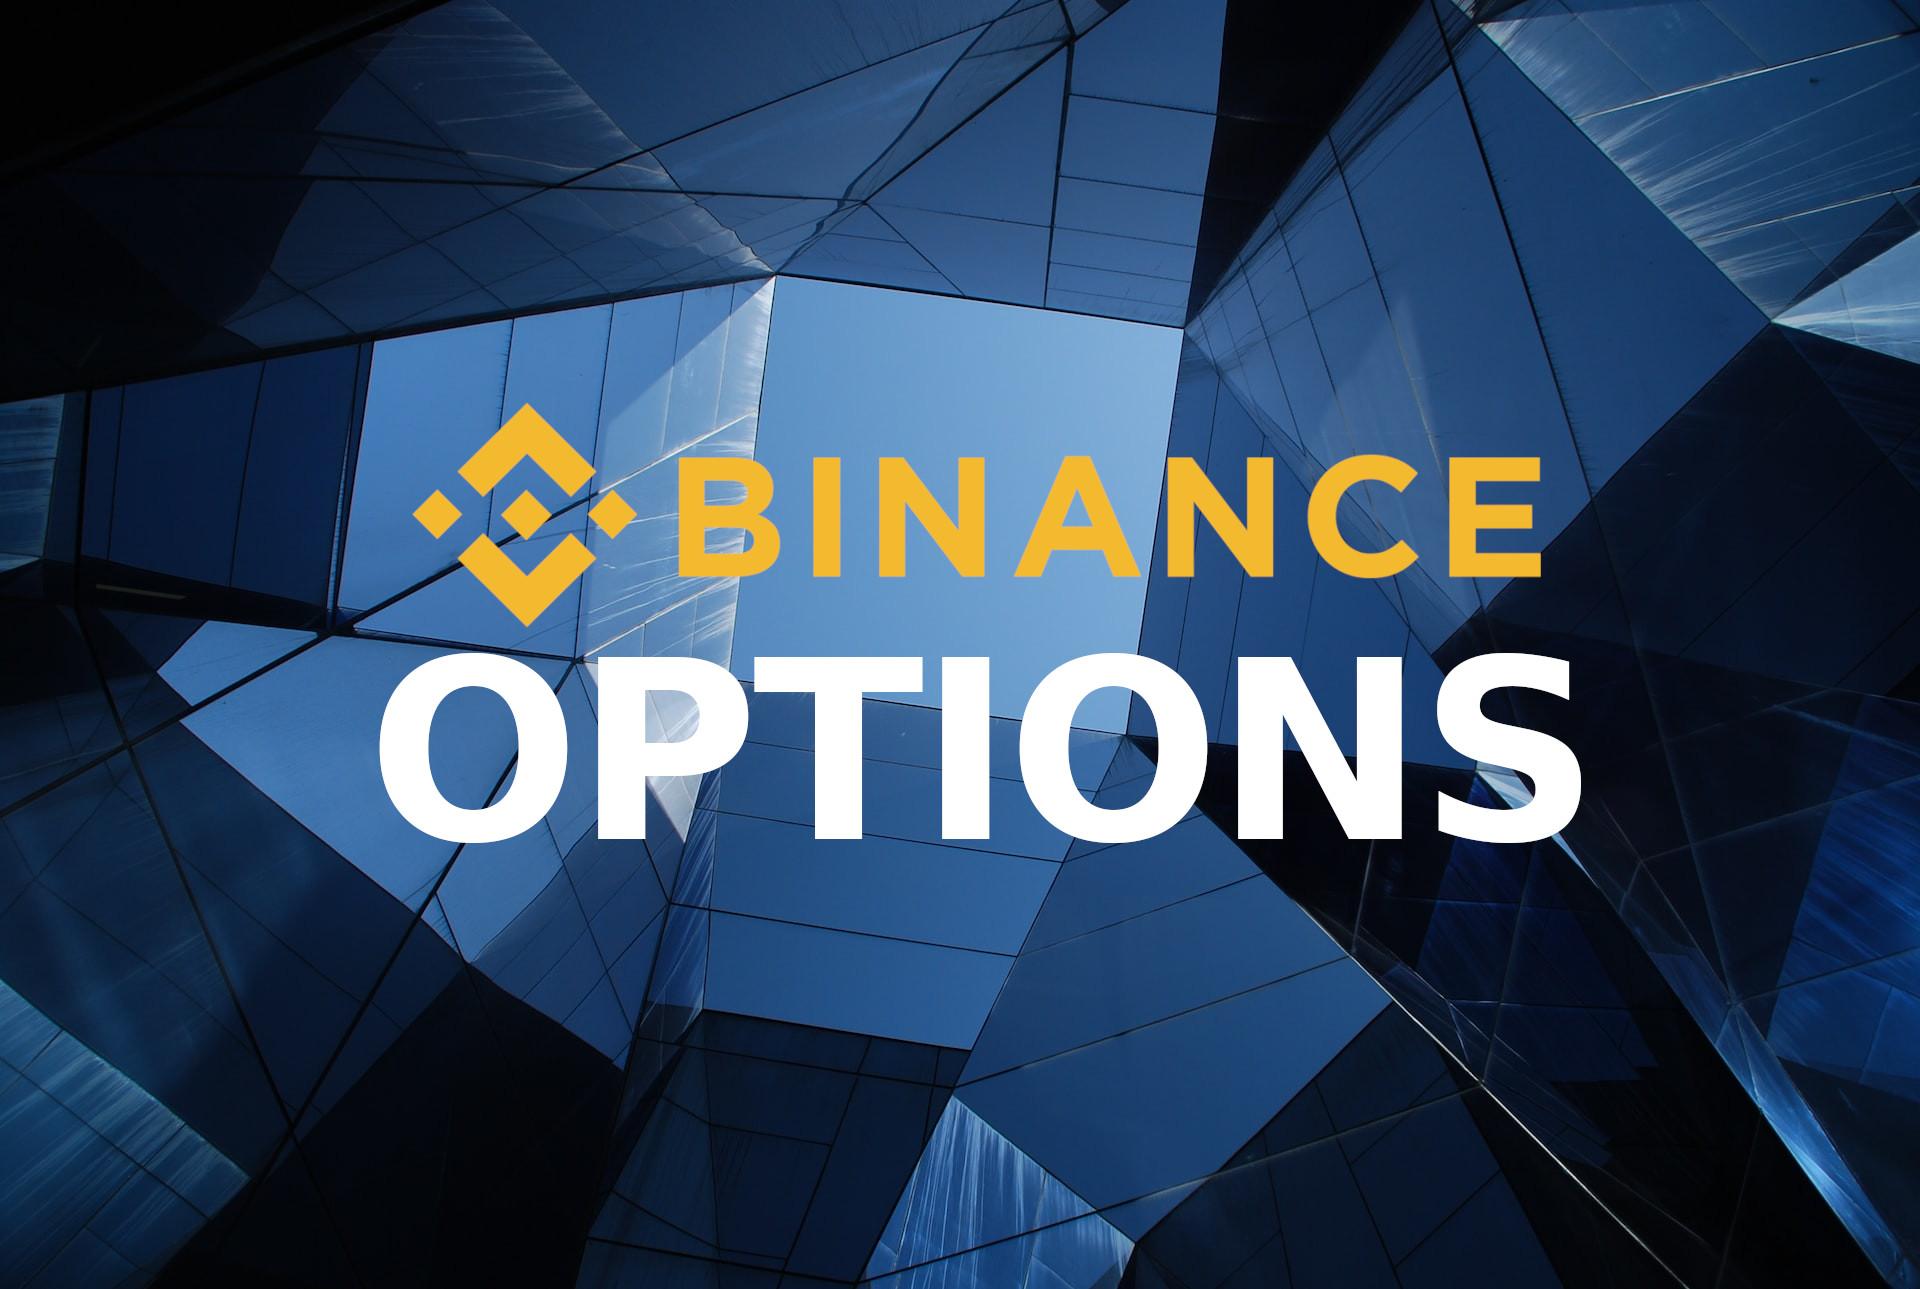 Binance Options cover image